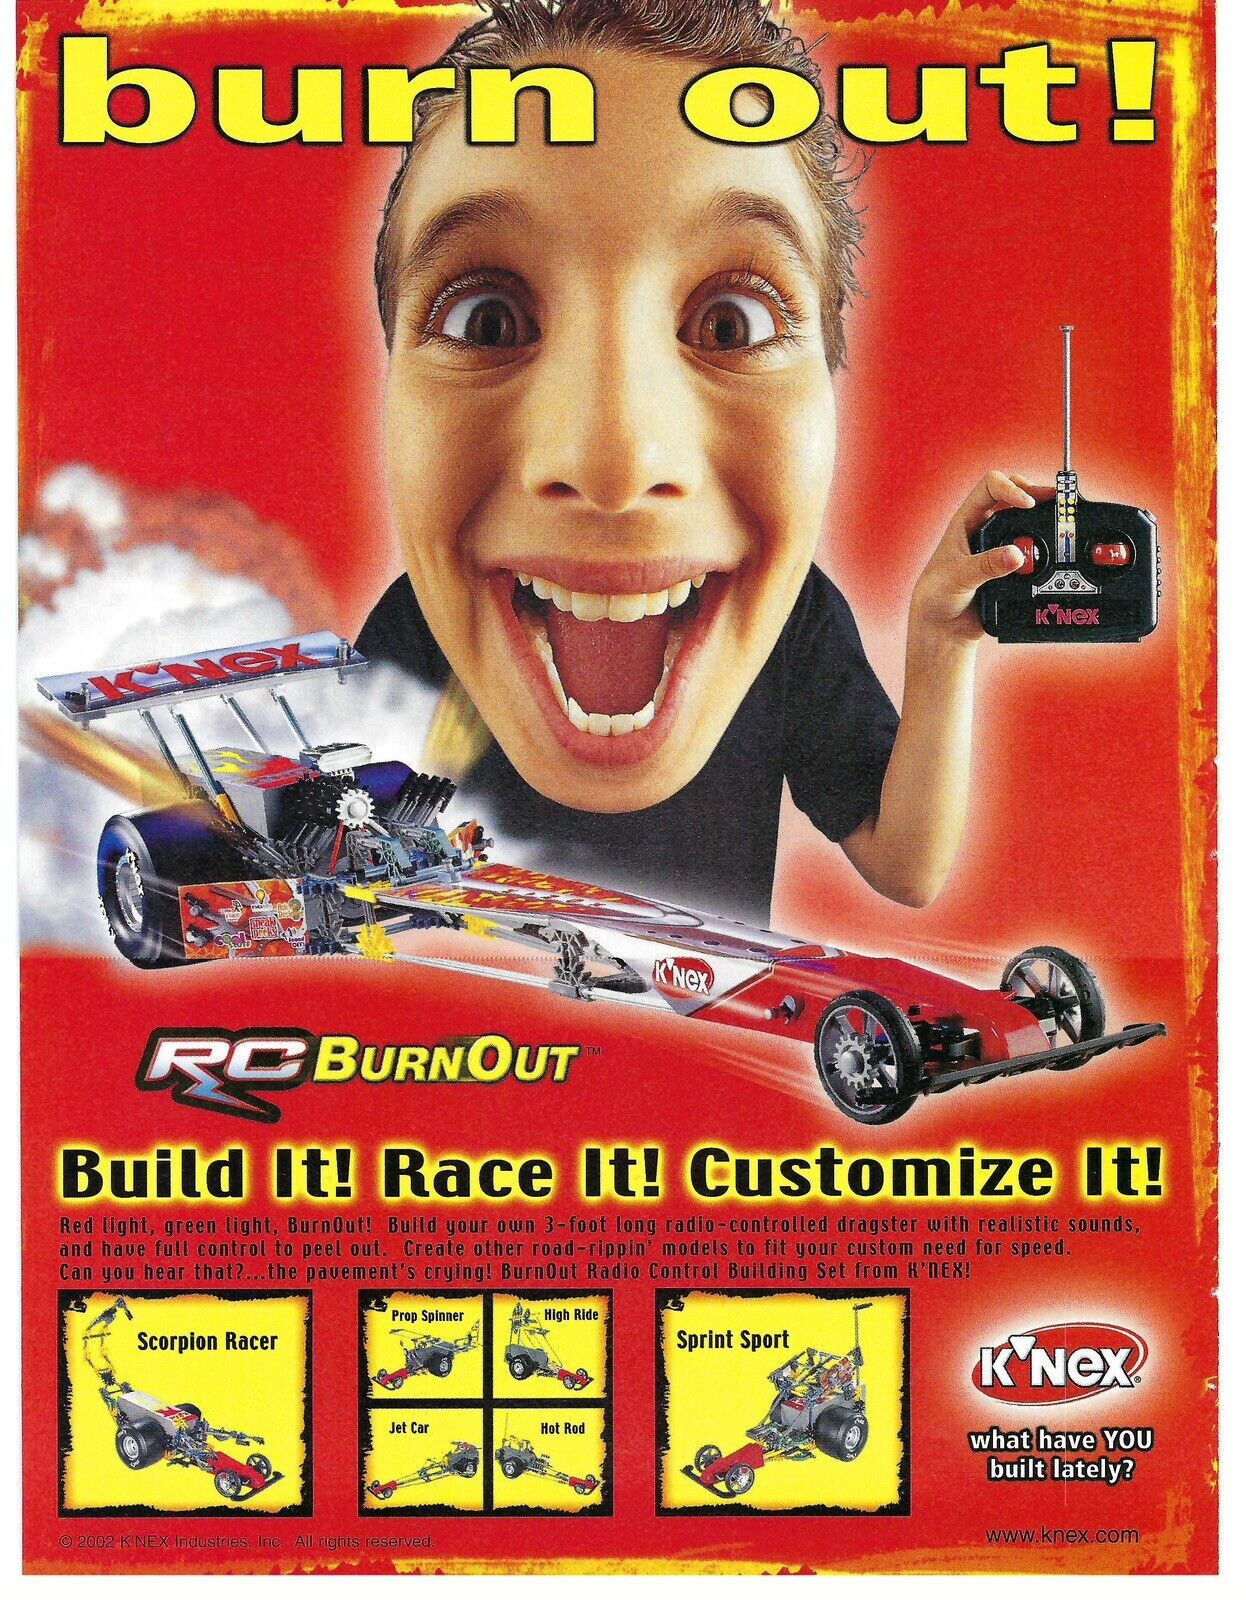 2003 K’Nex RC Car Burn Out Building Racing Toy Vintage Magazine Print Ad/Poster